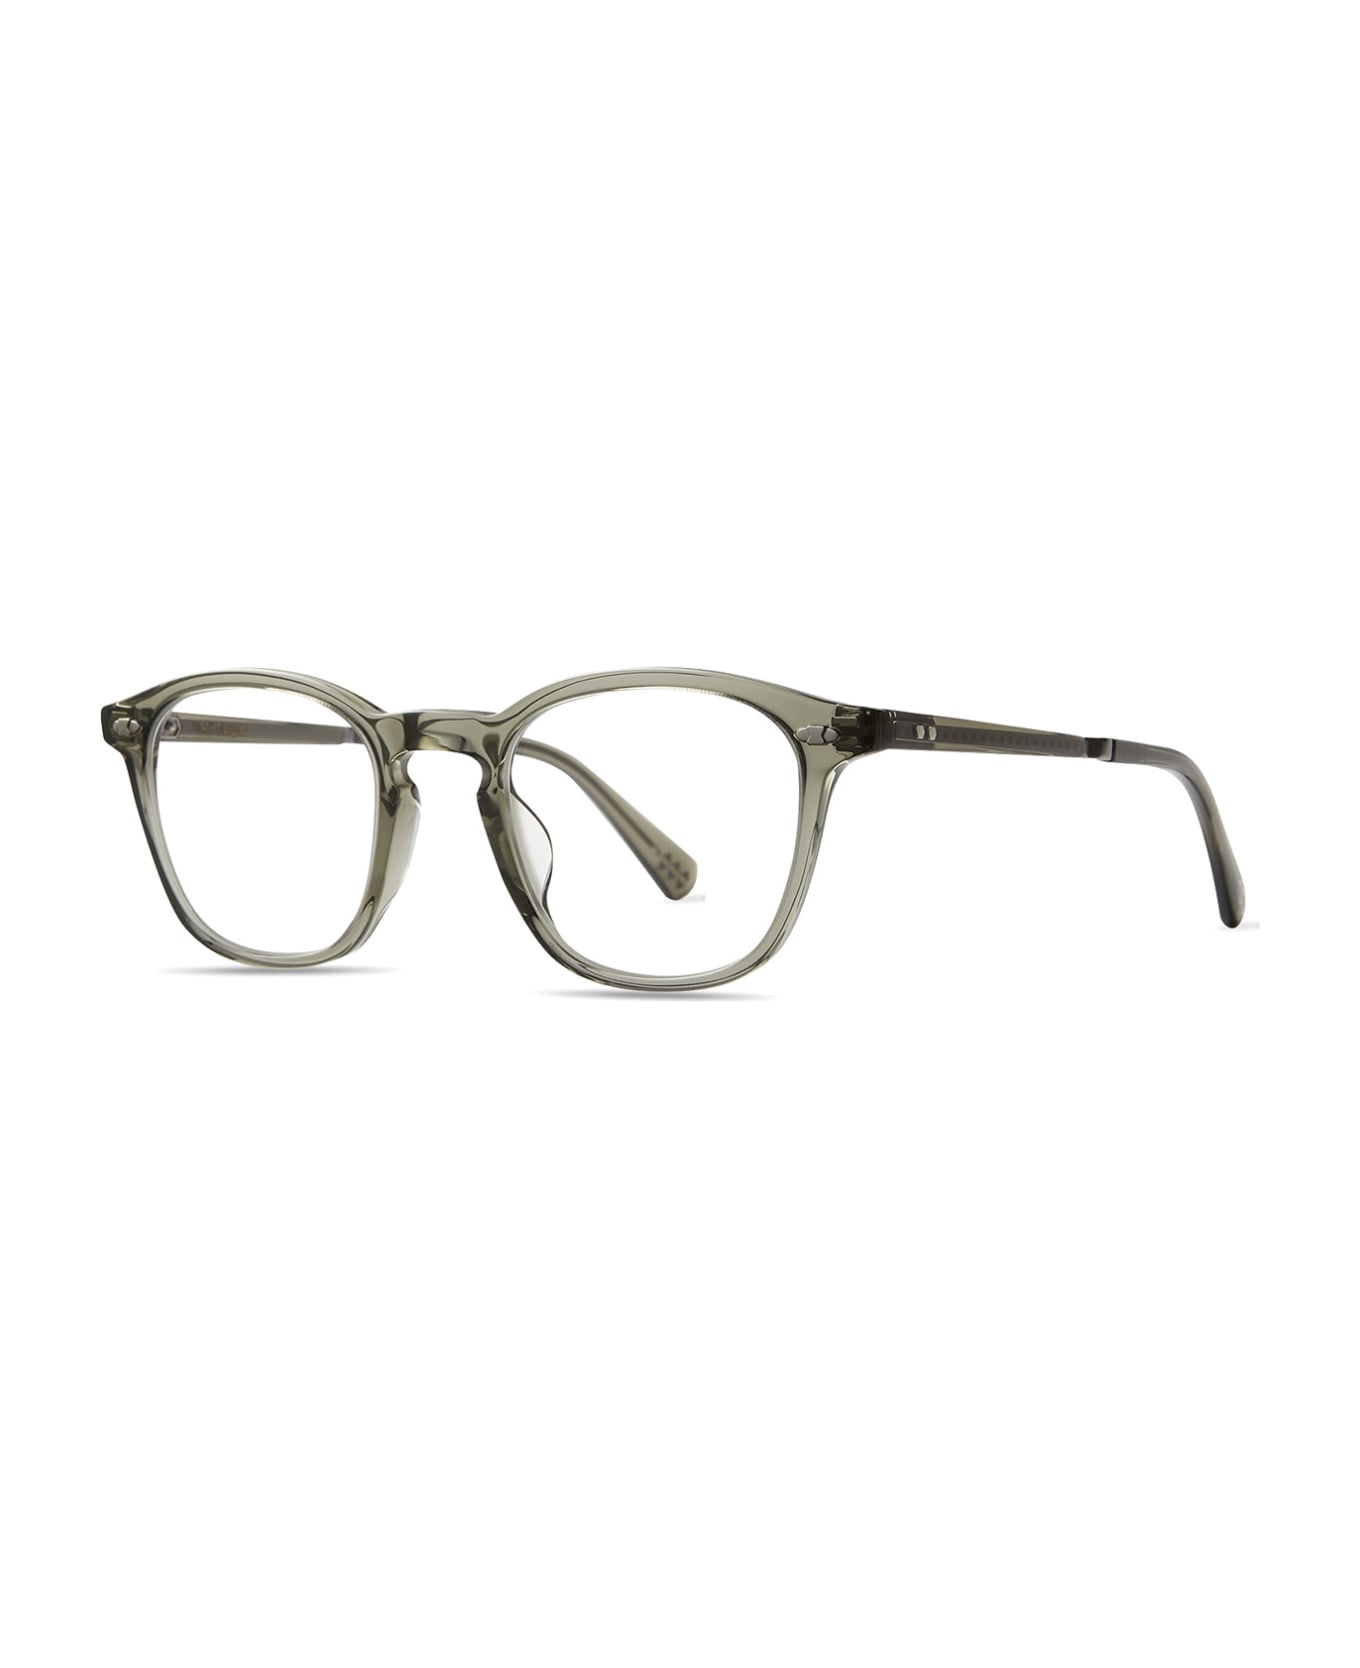 Mr. Leight Devon C Hunter-platinum Glasses - Hunter-Platinum